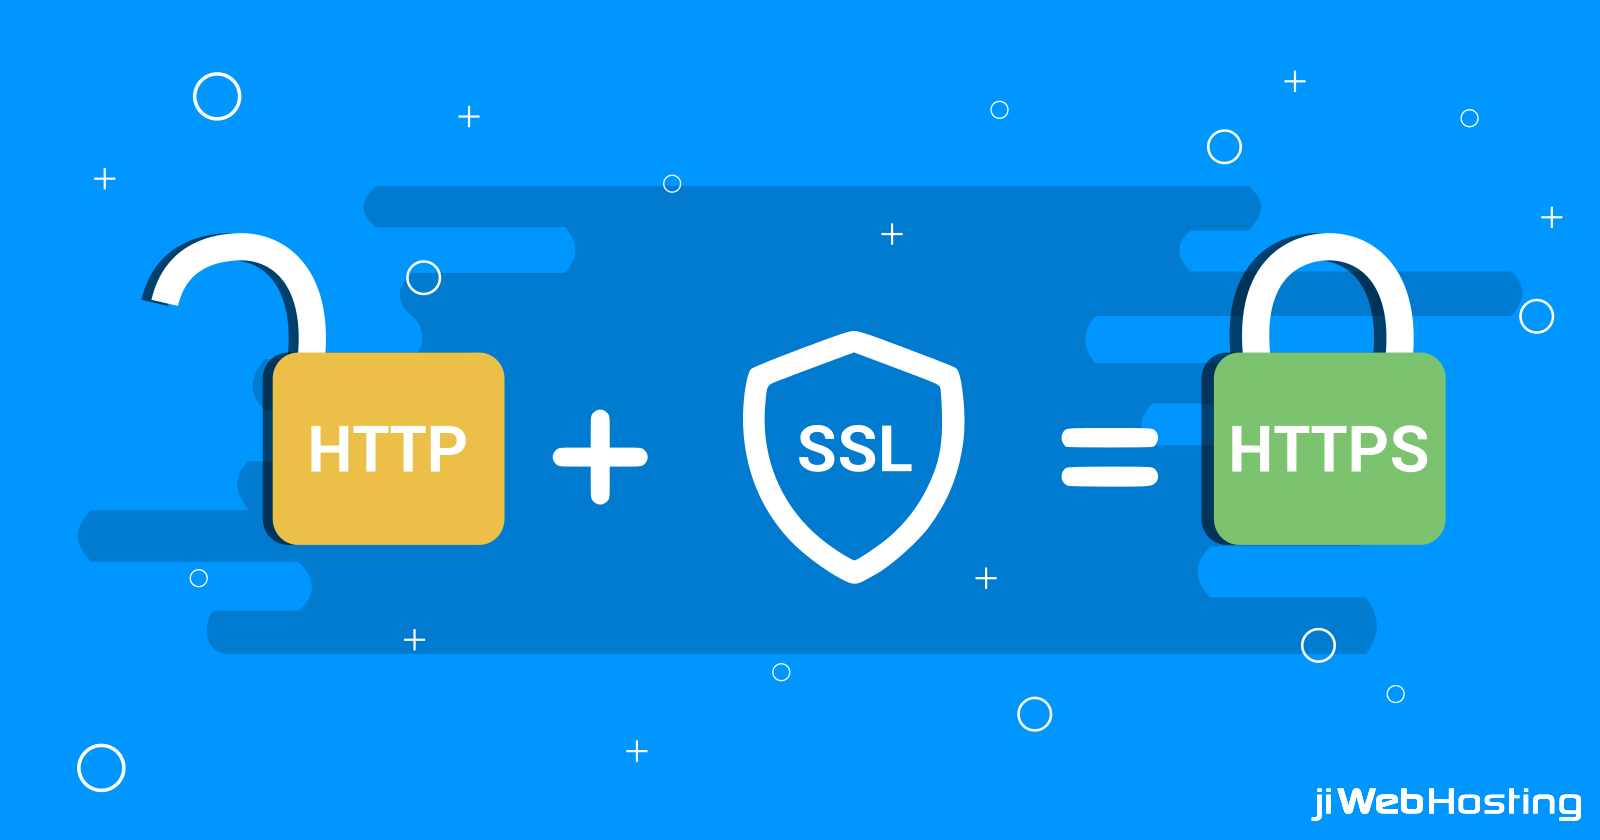 How to Setup SSL on your Server?